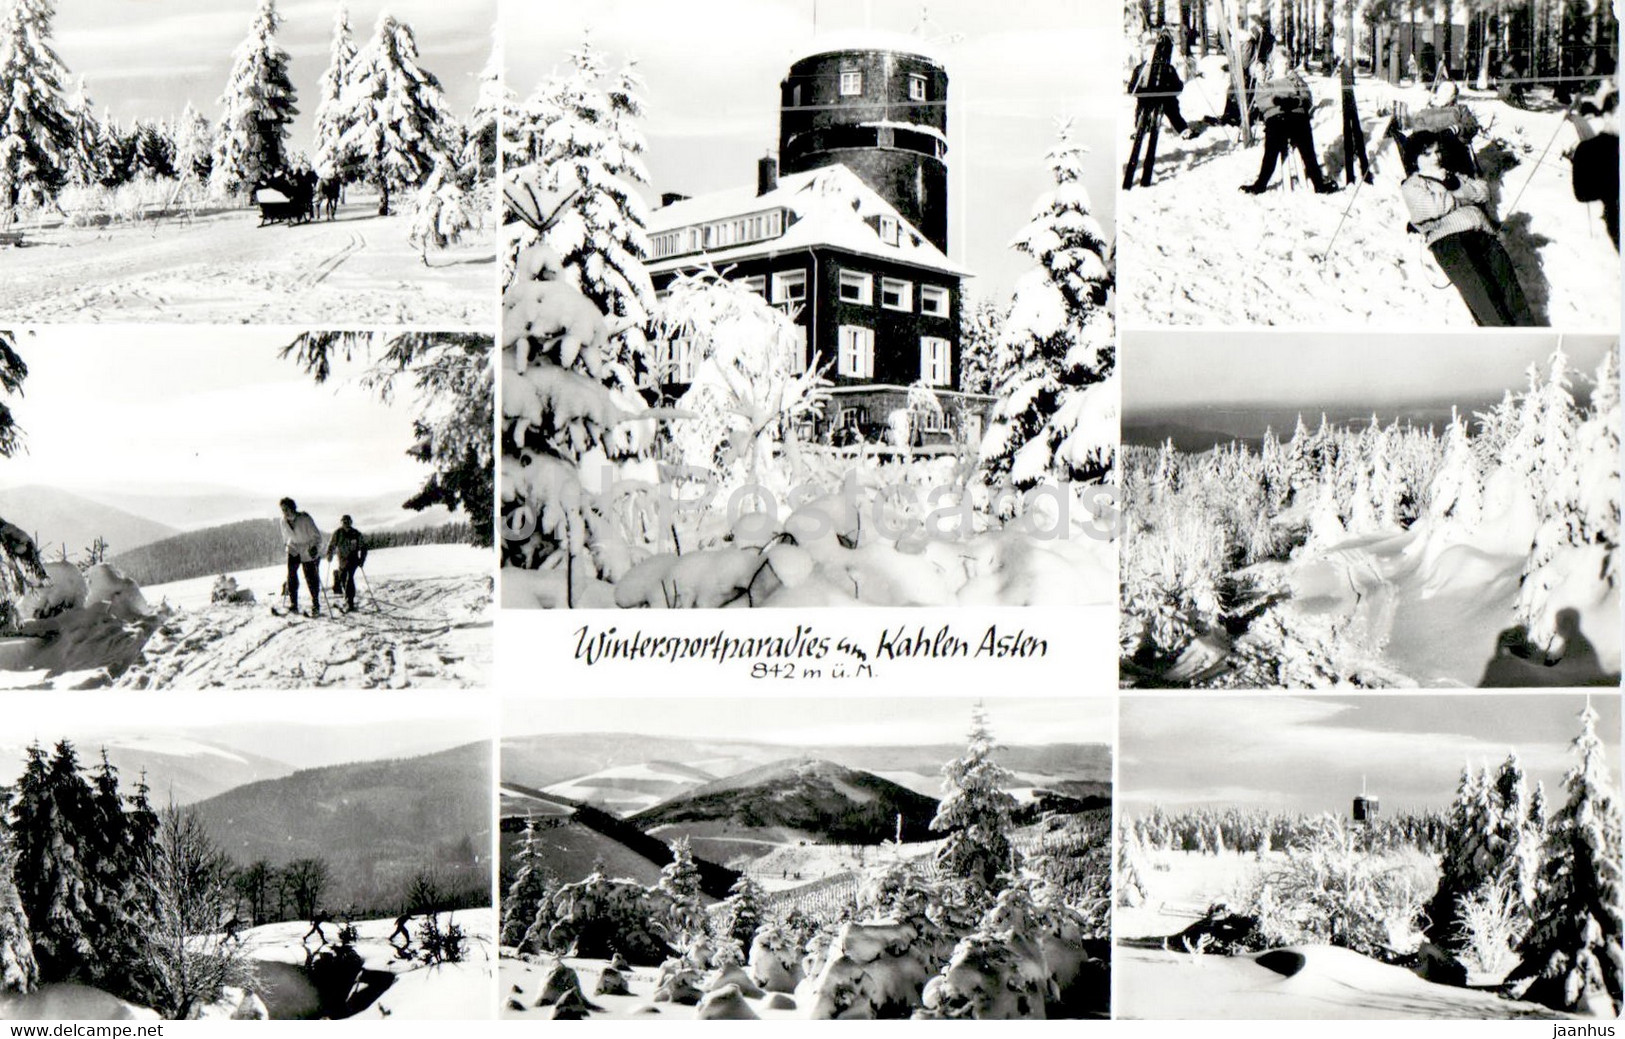 Wintersportparadies Am Kahlen Asten 842 M - Old Postcard - 1950s - Germany - Used - Winterberg